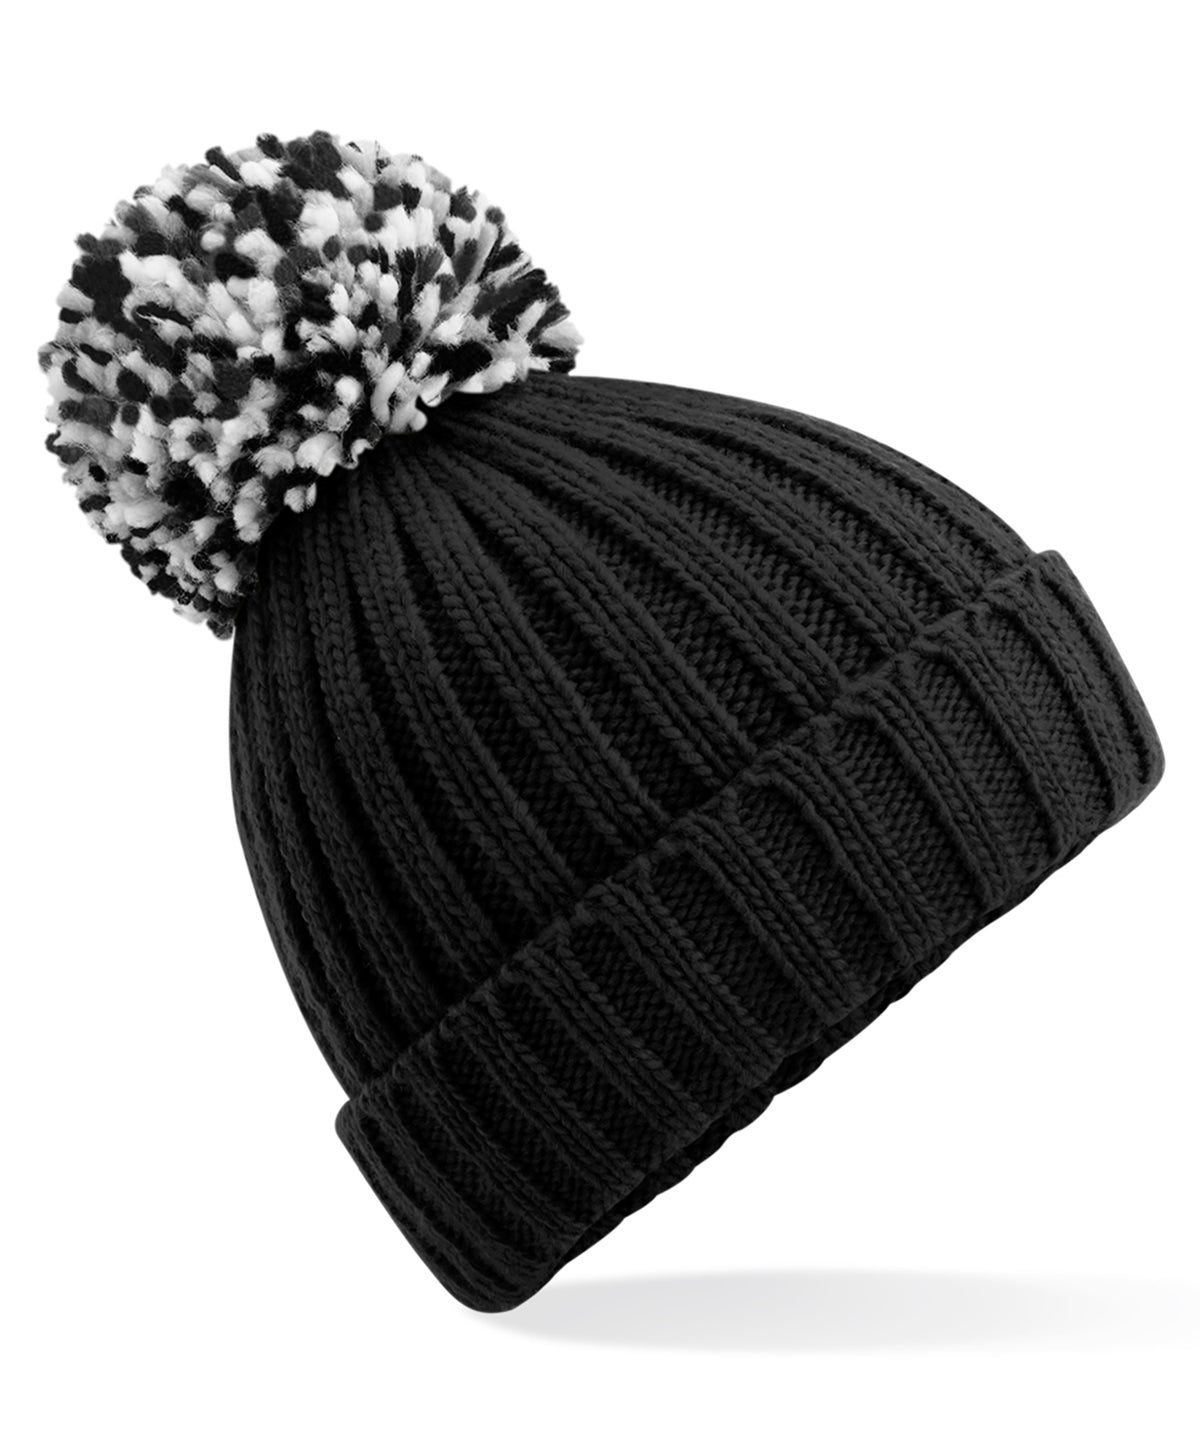 Personalised Hats - Black Beechfield Hygge beanie